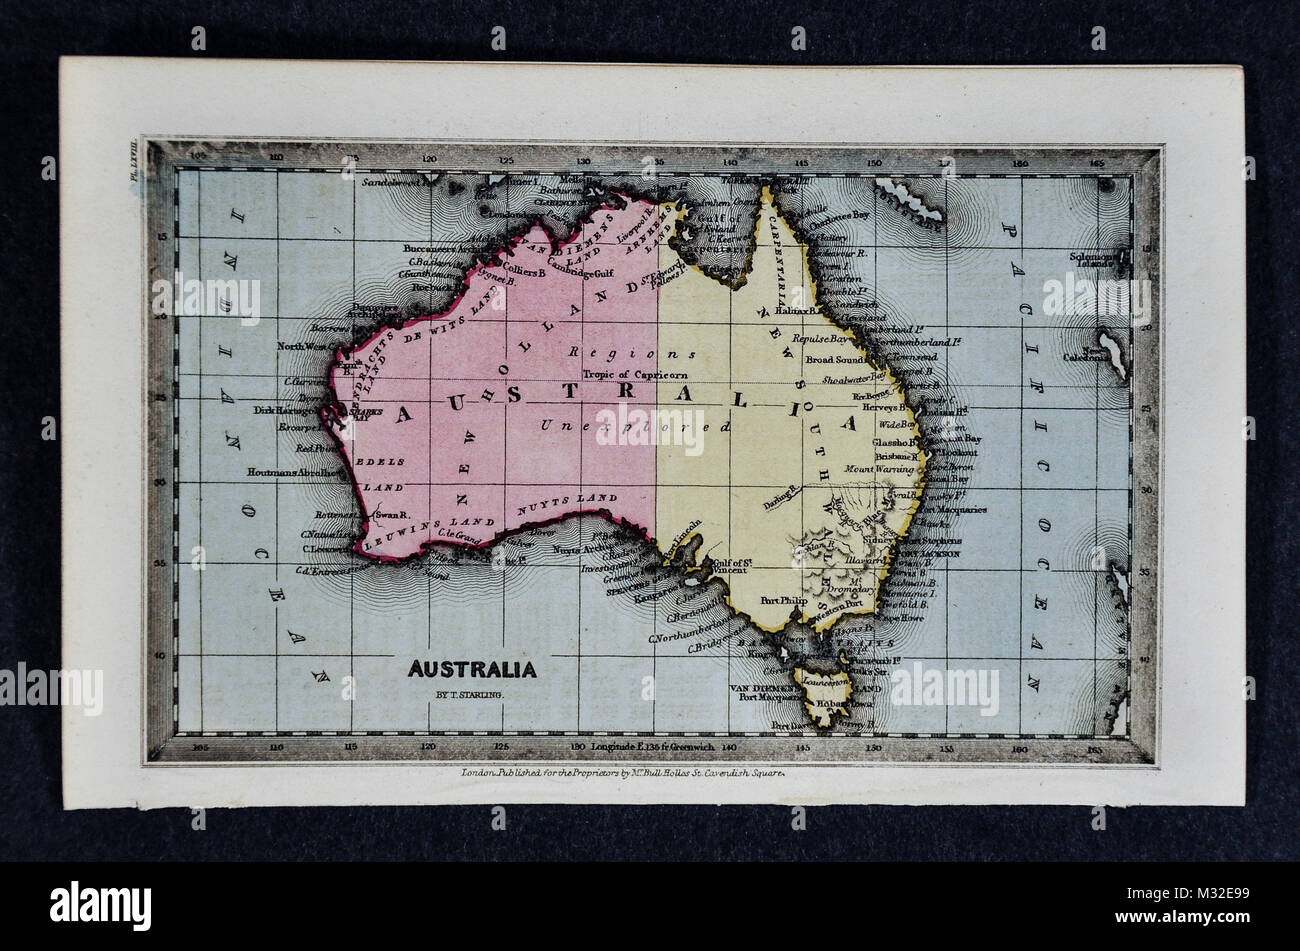 Starling 1834 Map - Australia - Sydney Port Jackson New Holland Unexplored Regions Stock Photo